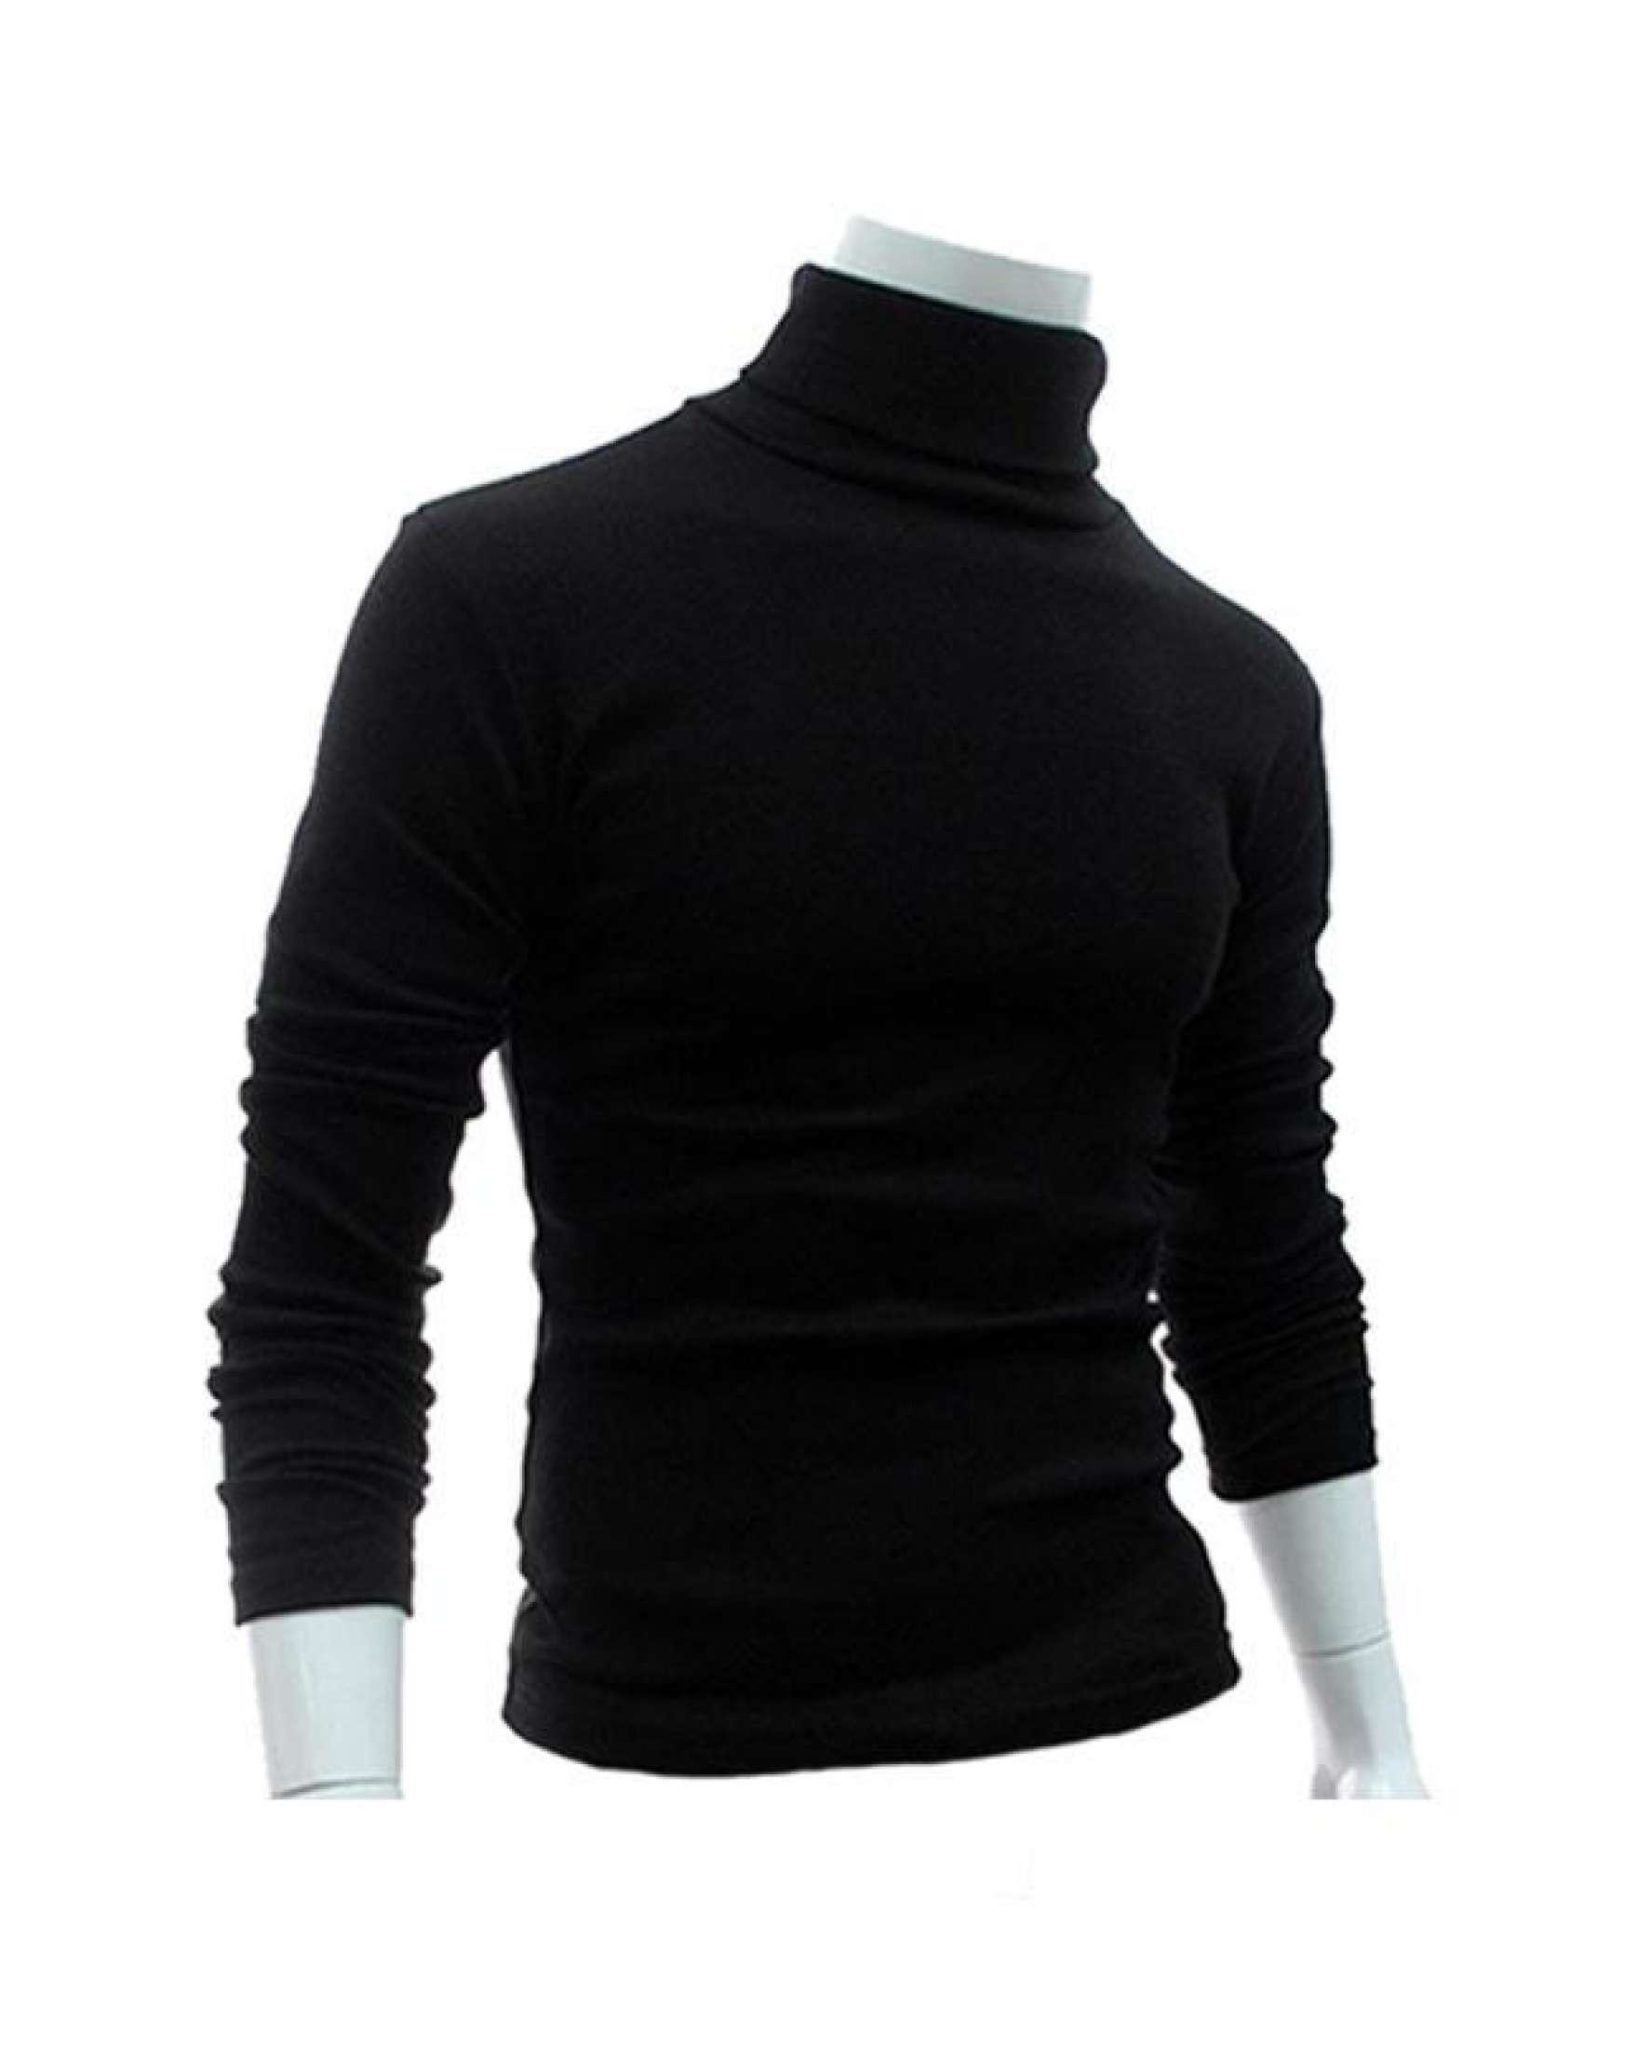 High Neck Full Sleeves For Men Large Size - Online Shopping in Pakistan ...